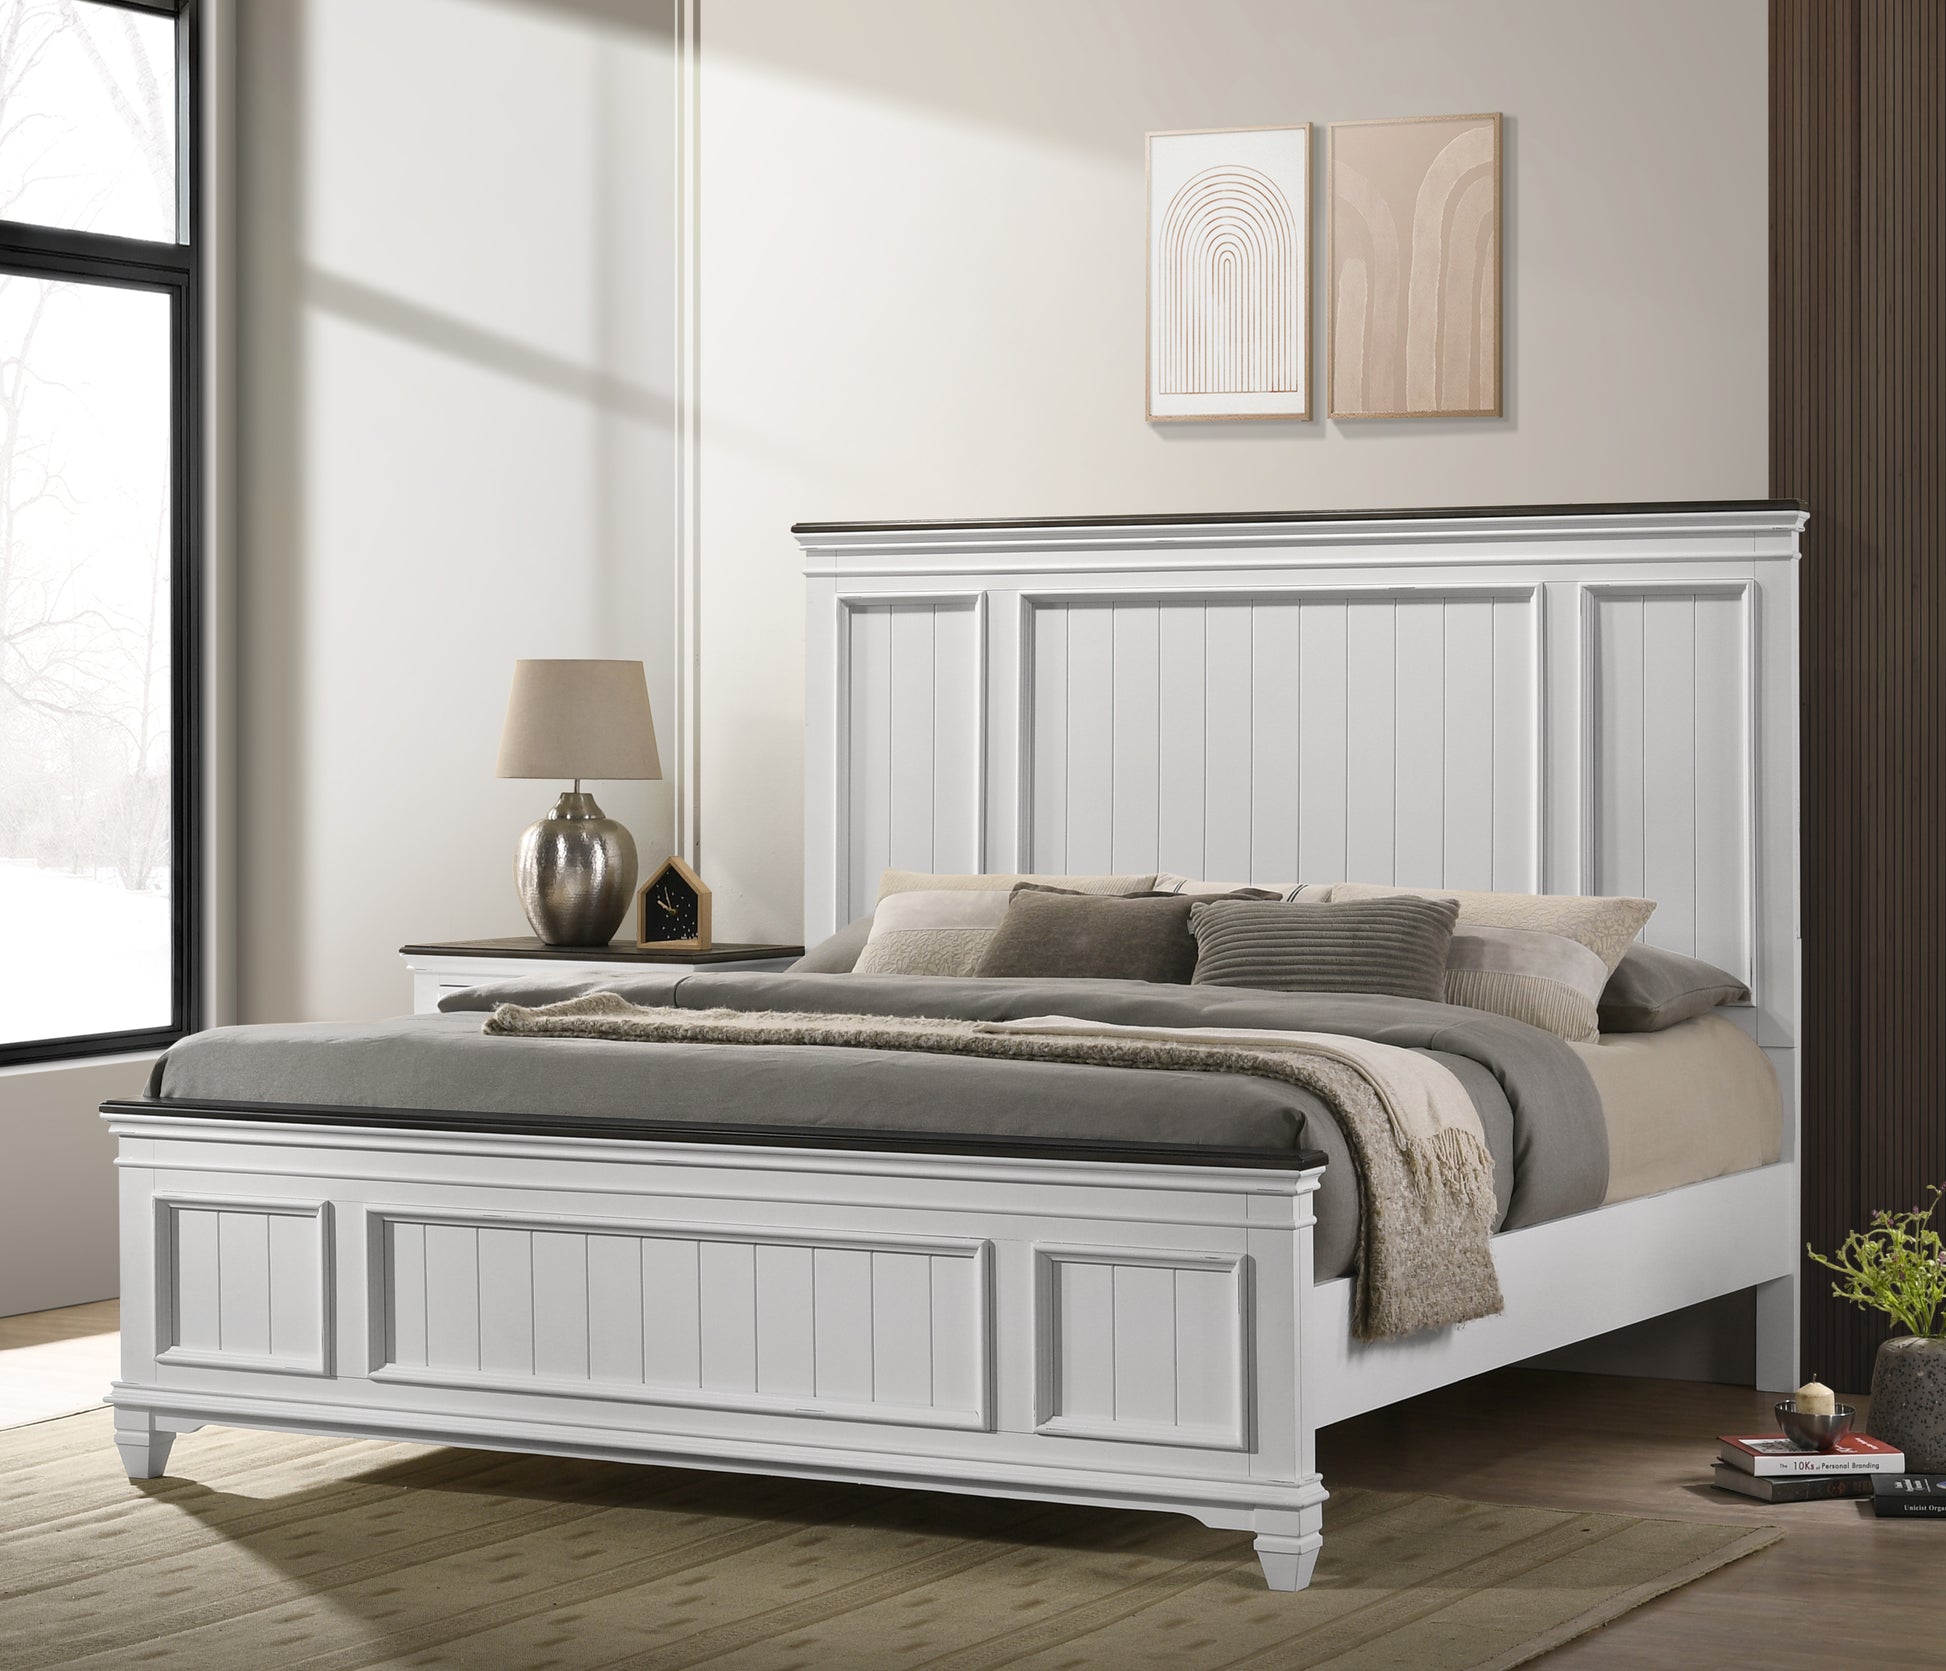 Roundhill Furniture Bedroom Furniture Bed Dresser King White